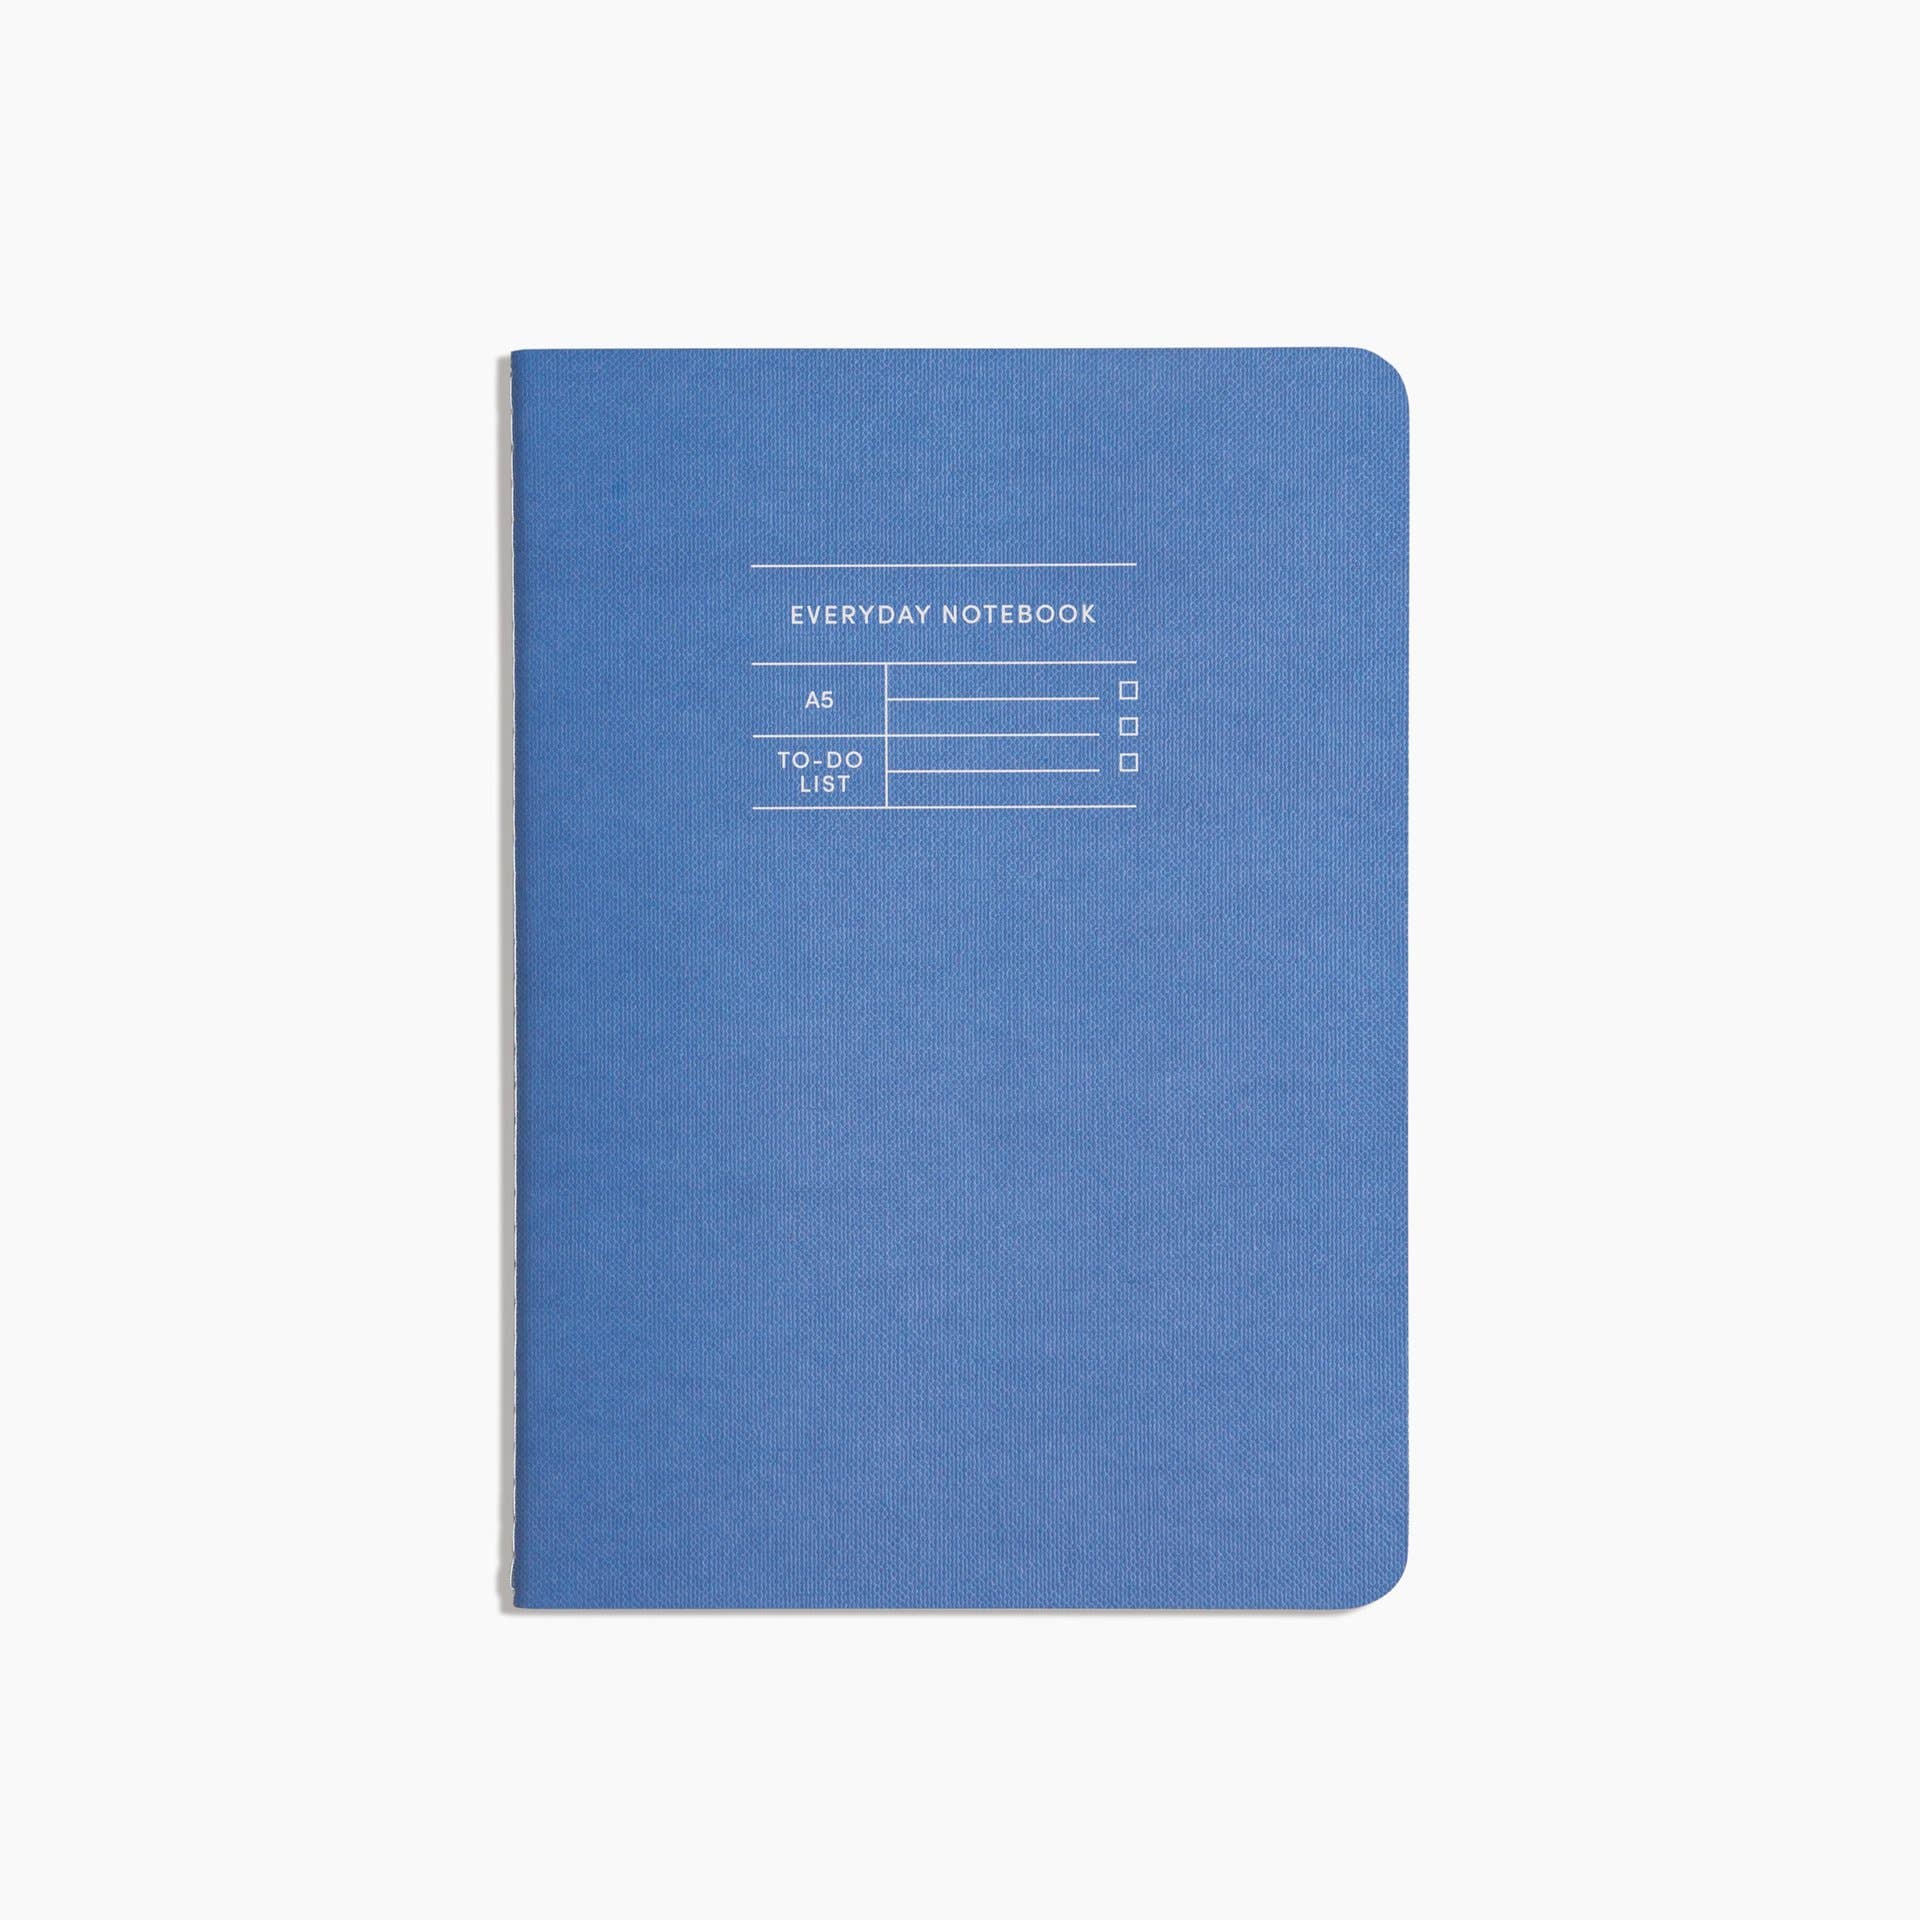 Poketo - Everyday Notebook in To Do